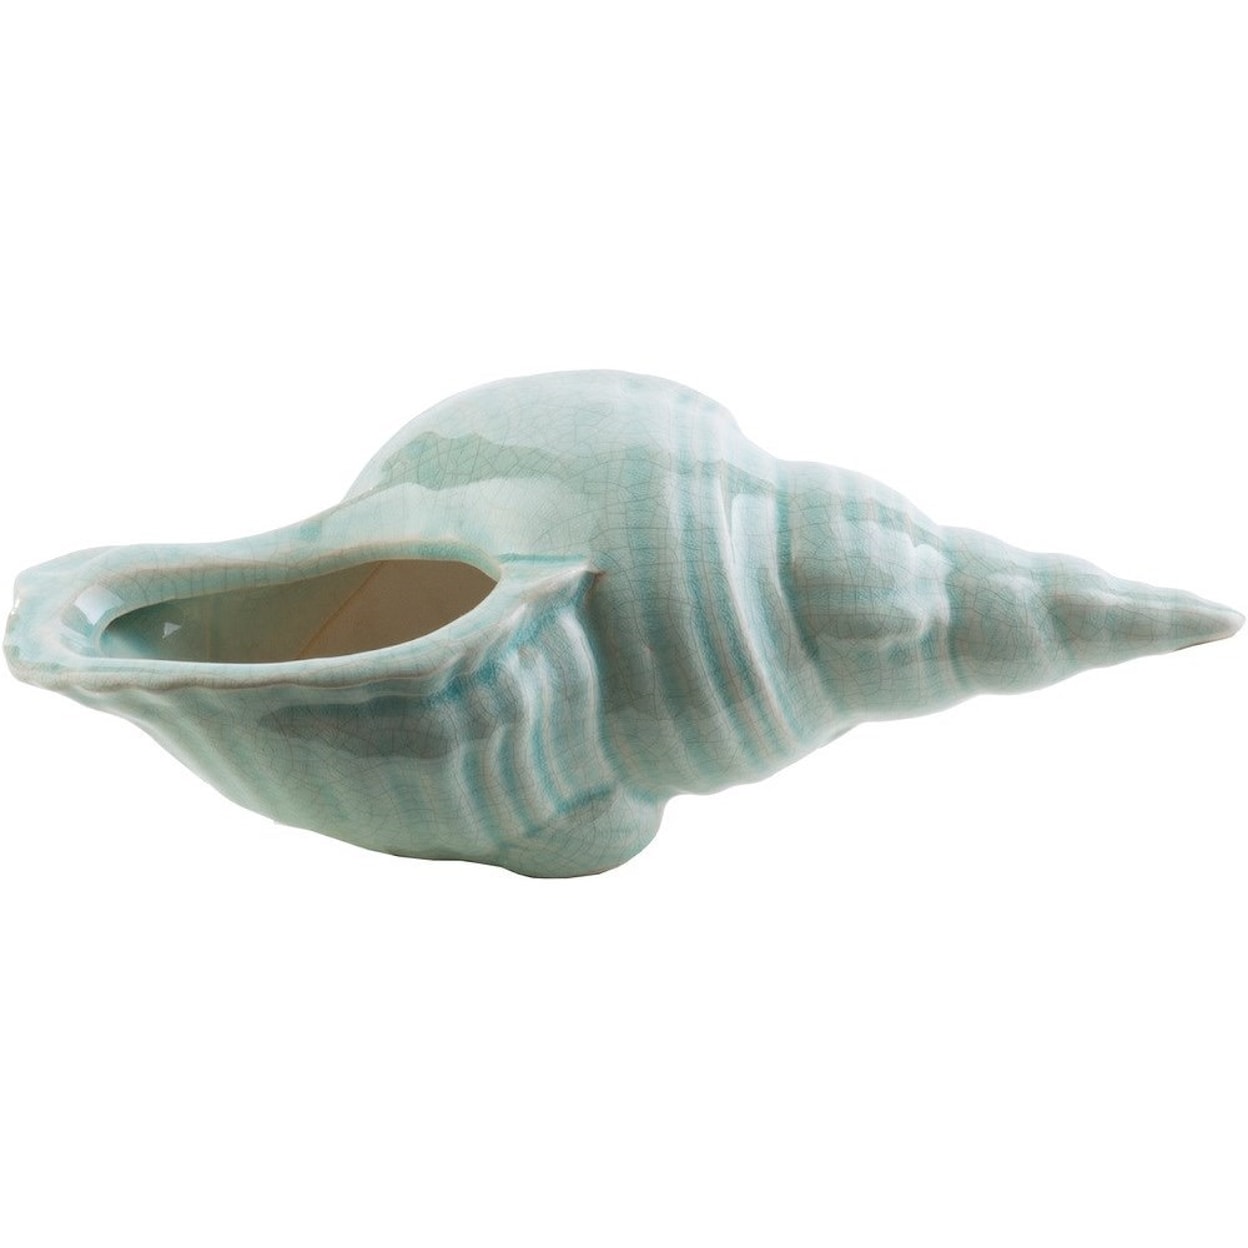 Surya Clearwater Ceramic Shell